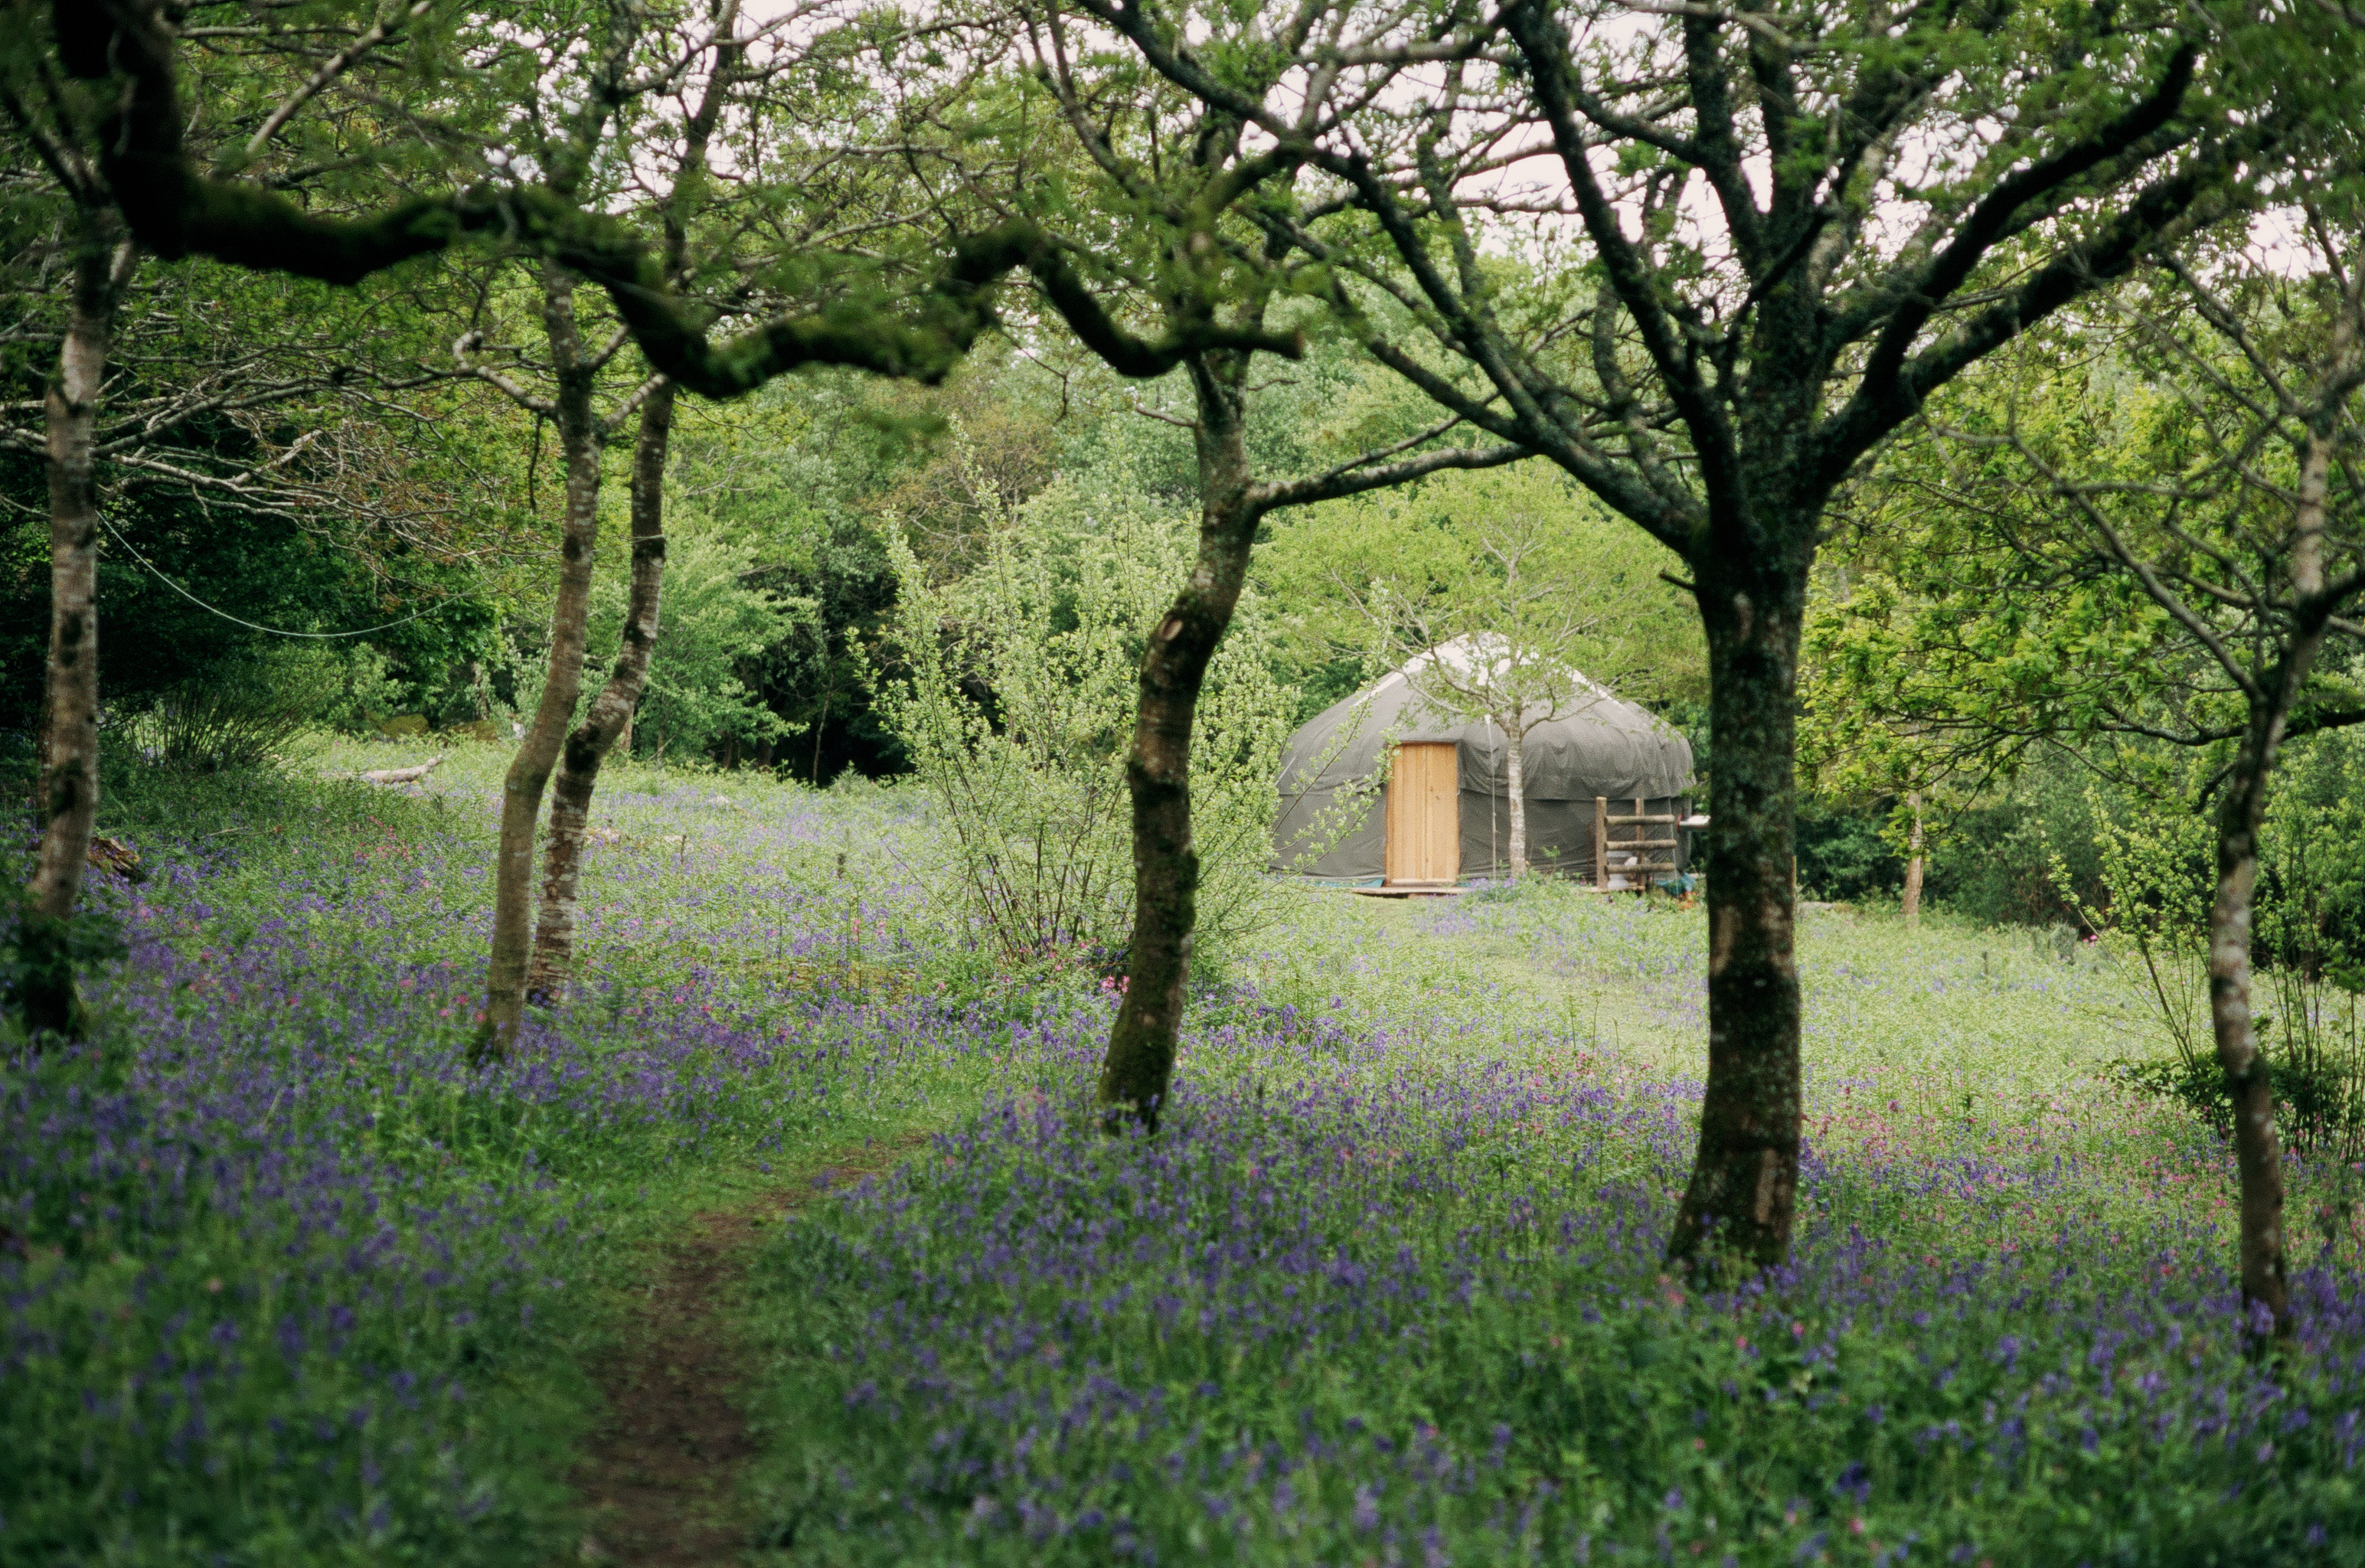 The Green Man yurt is hidden away among the oak and hawthorn trees